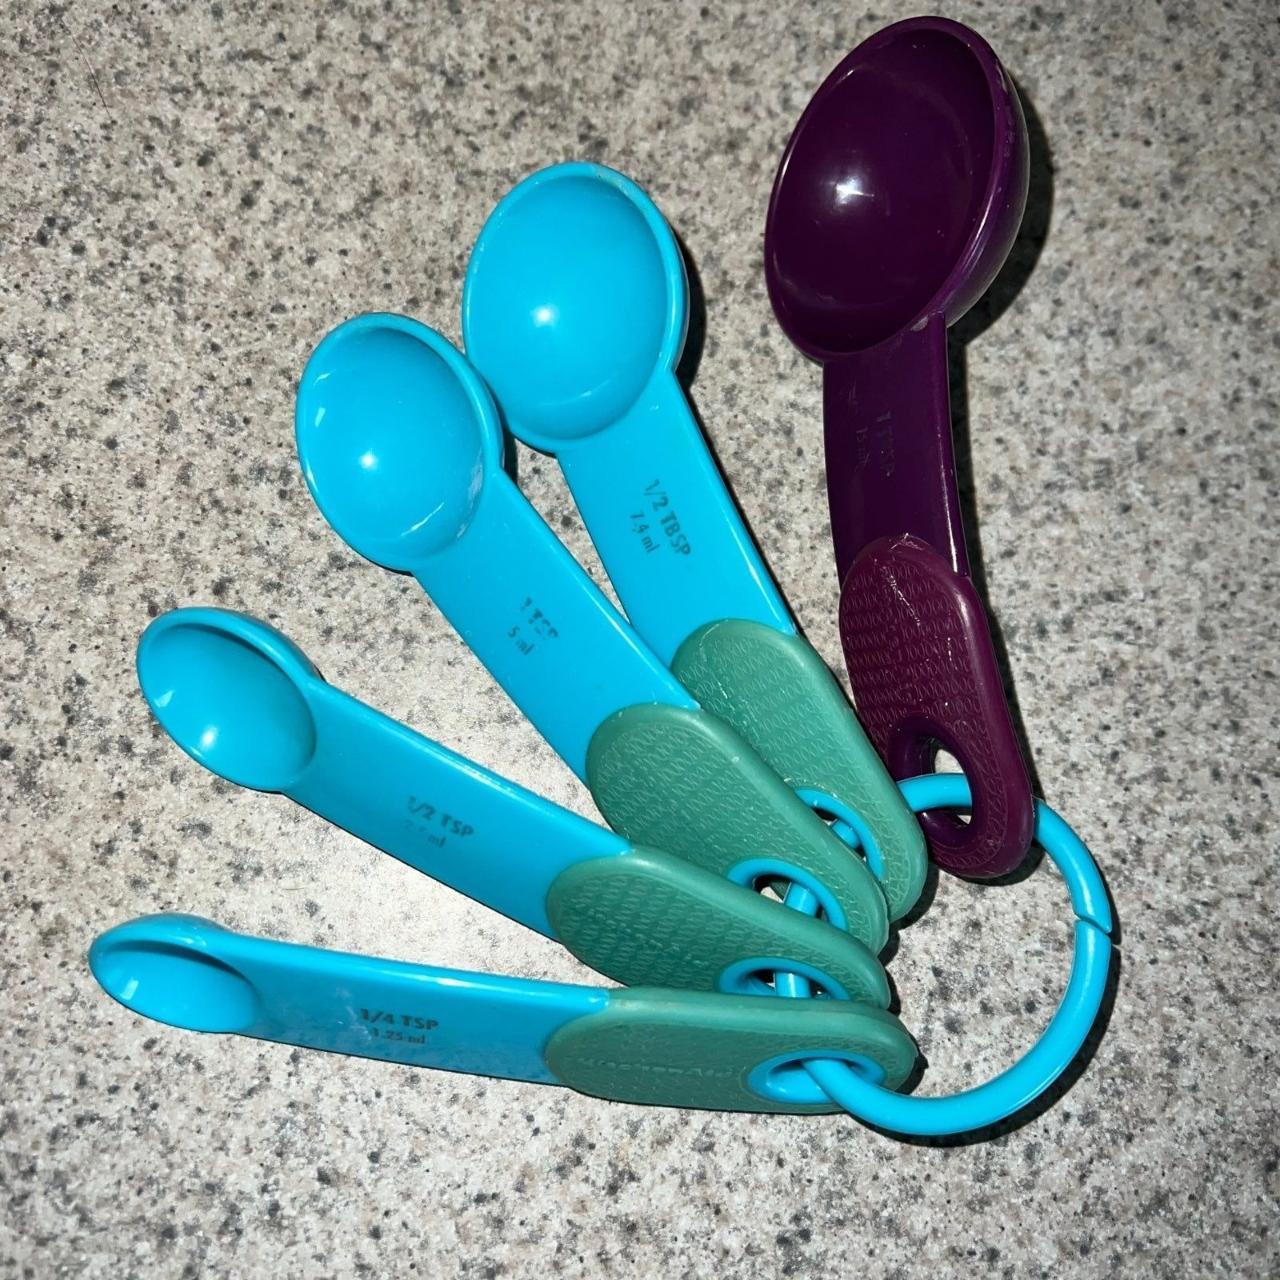 Kitchenaid Measuring Spoons - 5 spoons